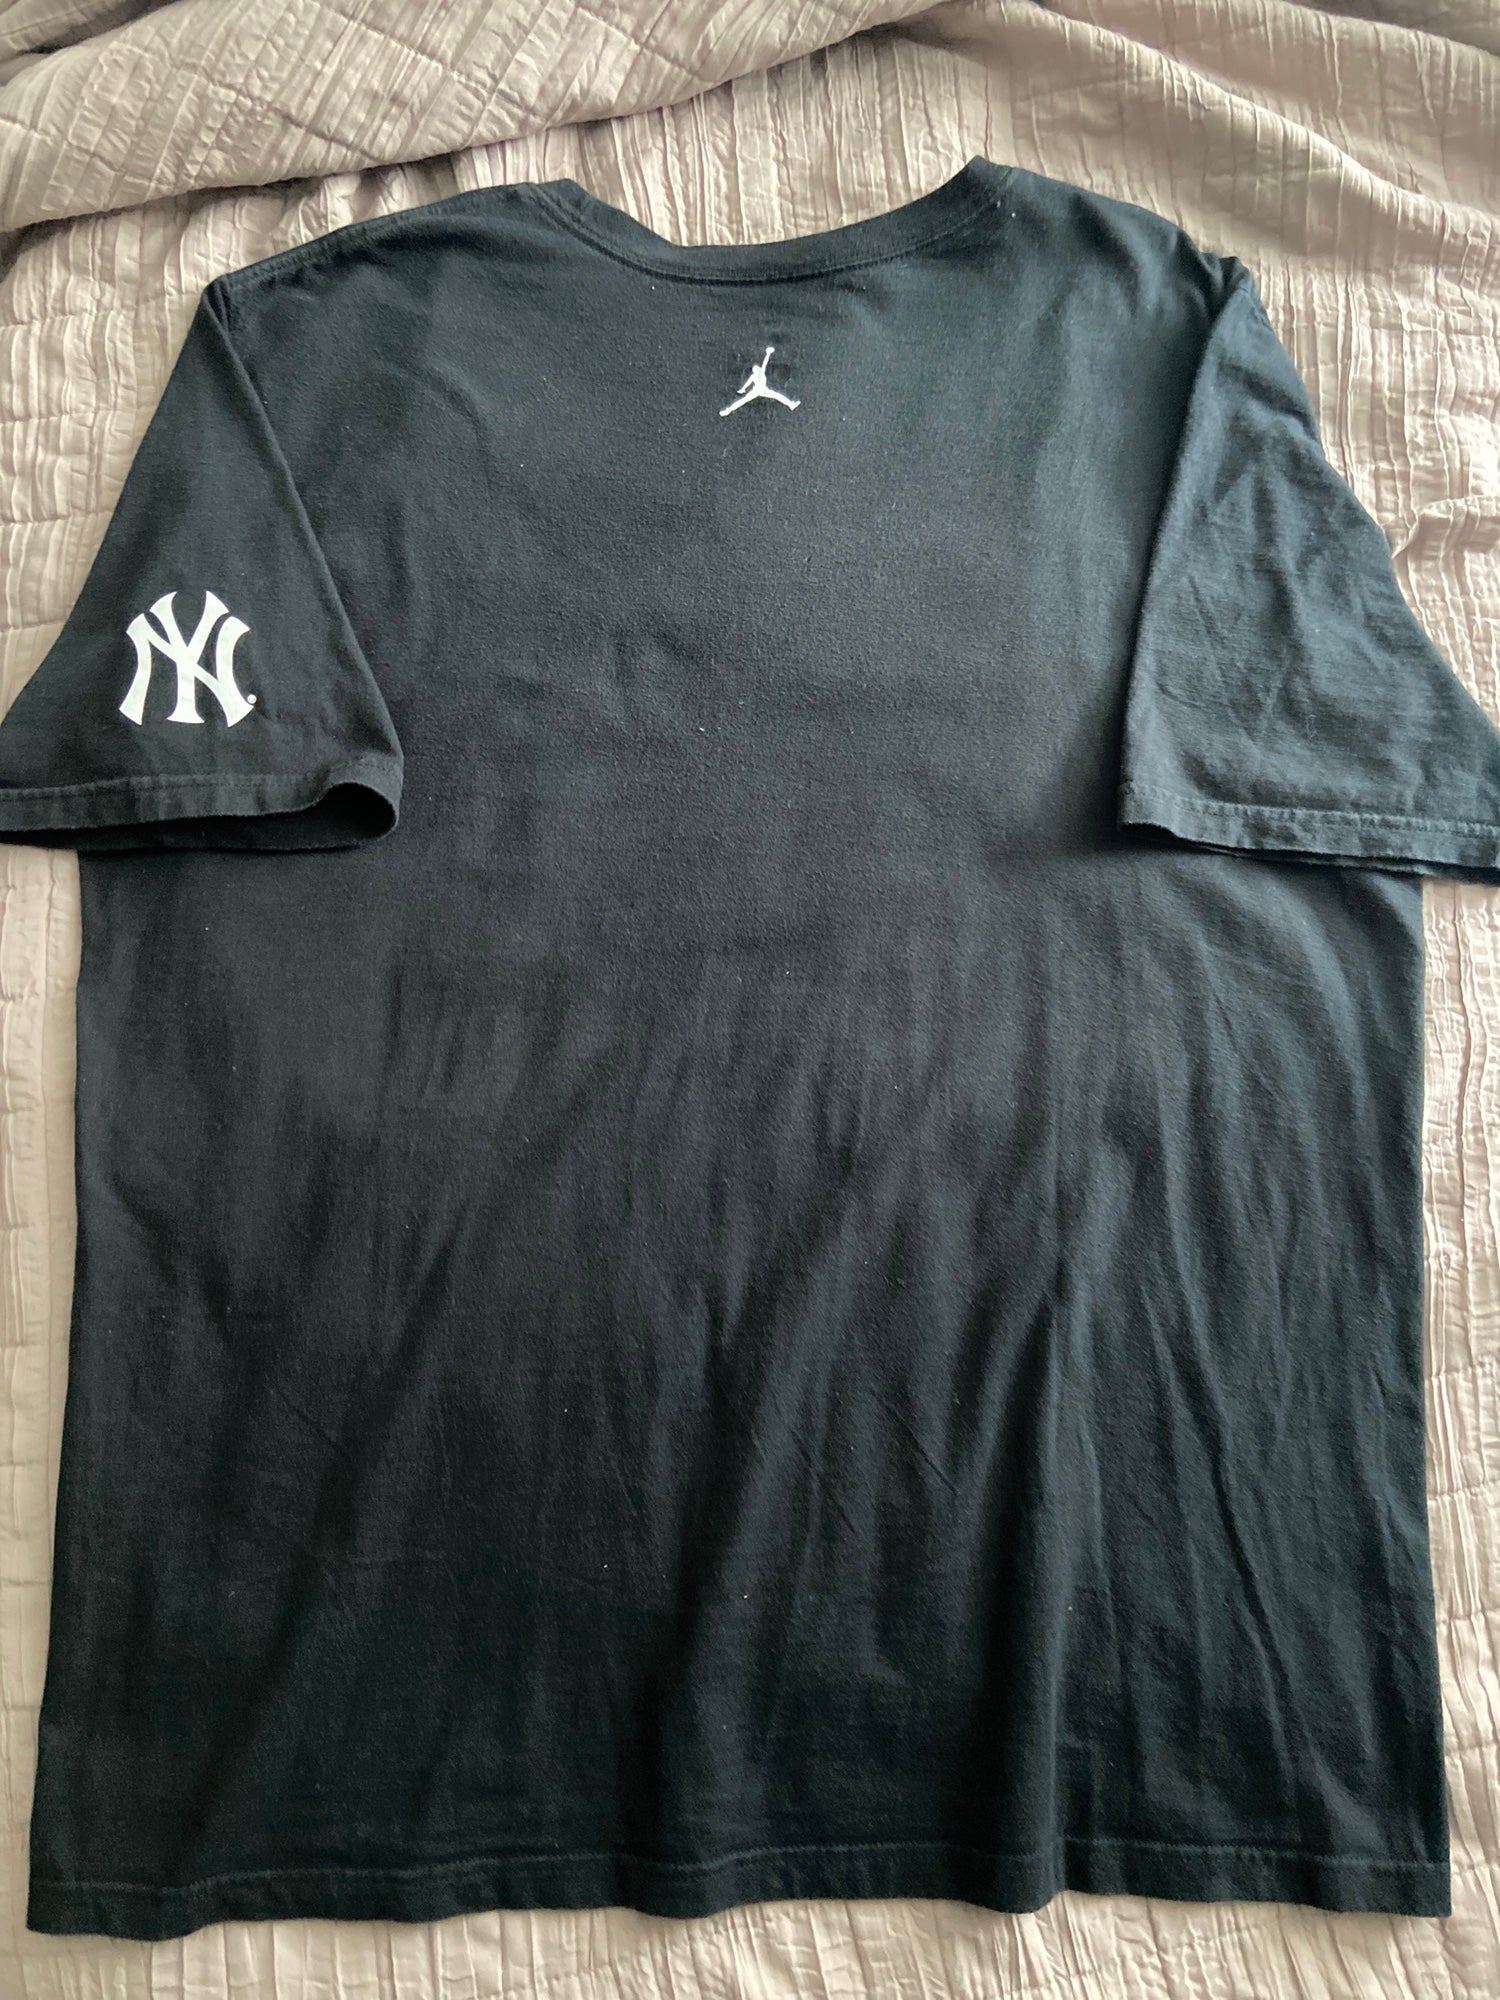 New York Yankees Derek Jeter Respect T-shirt, hoodie, sweater, long sleeve  and tank top